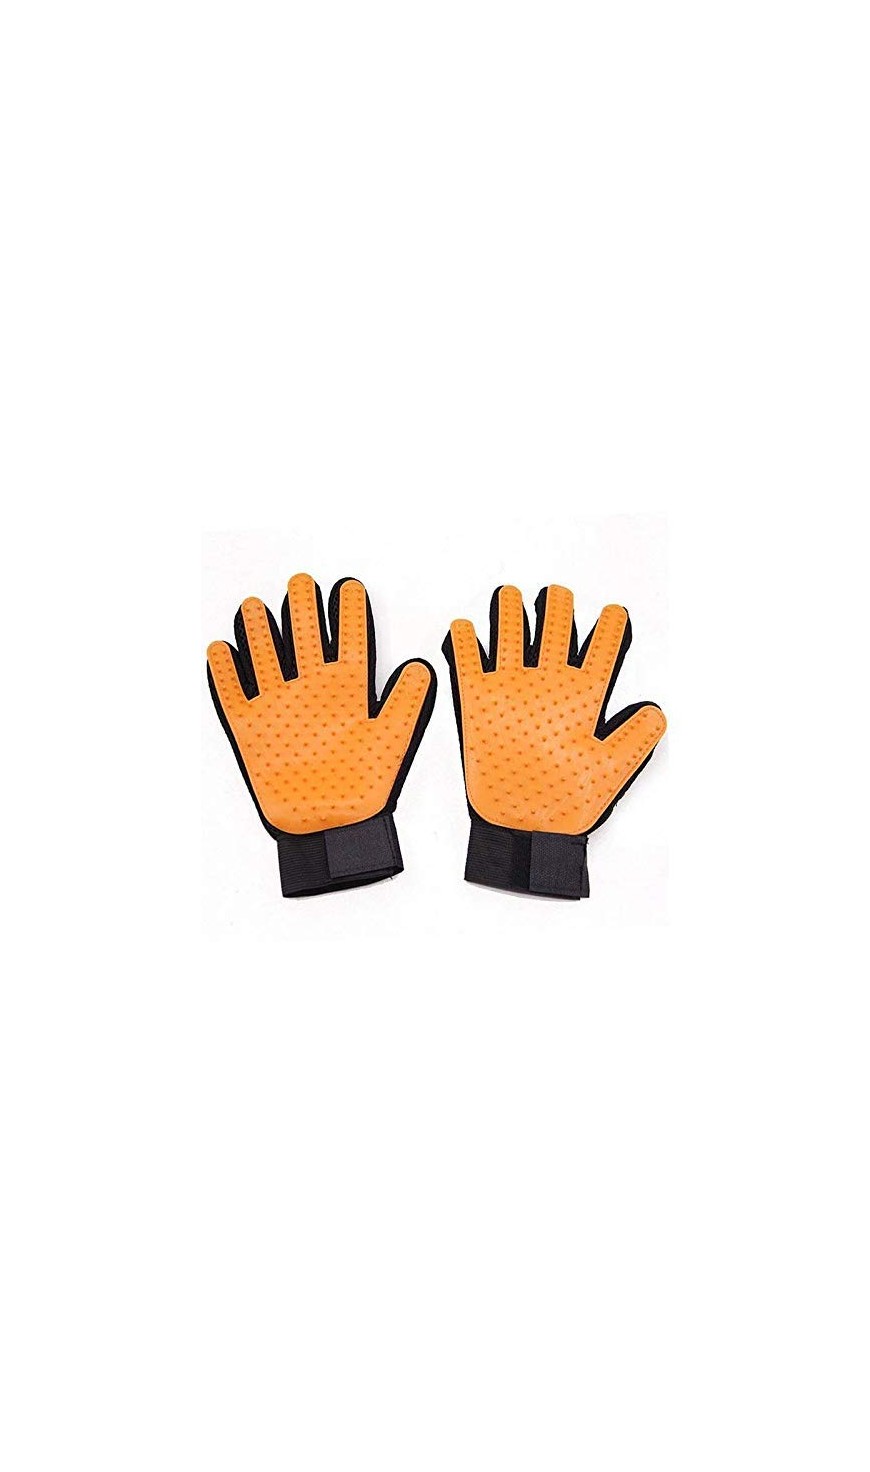 Pet Grooming Orange Glove